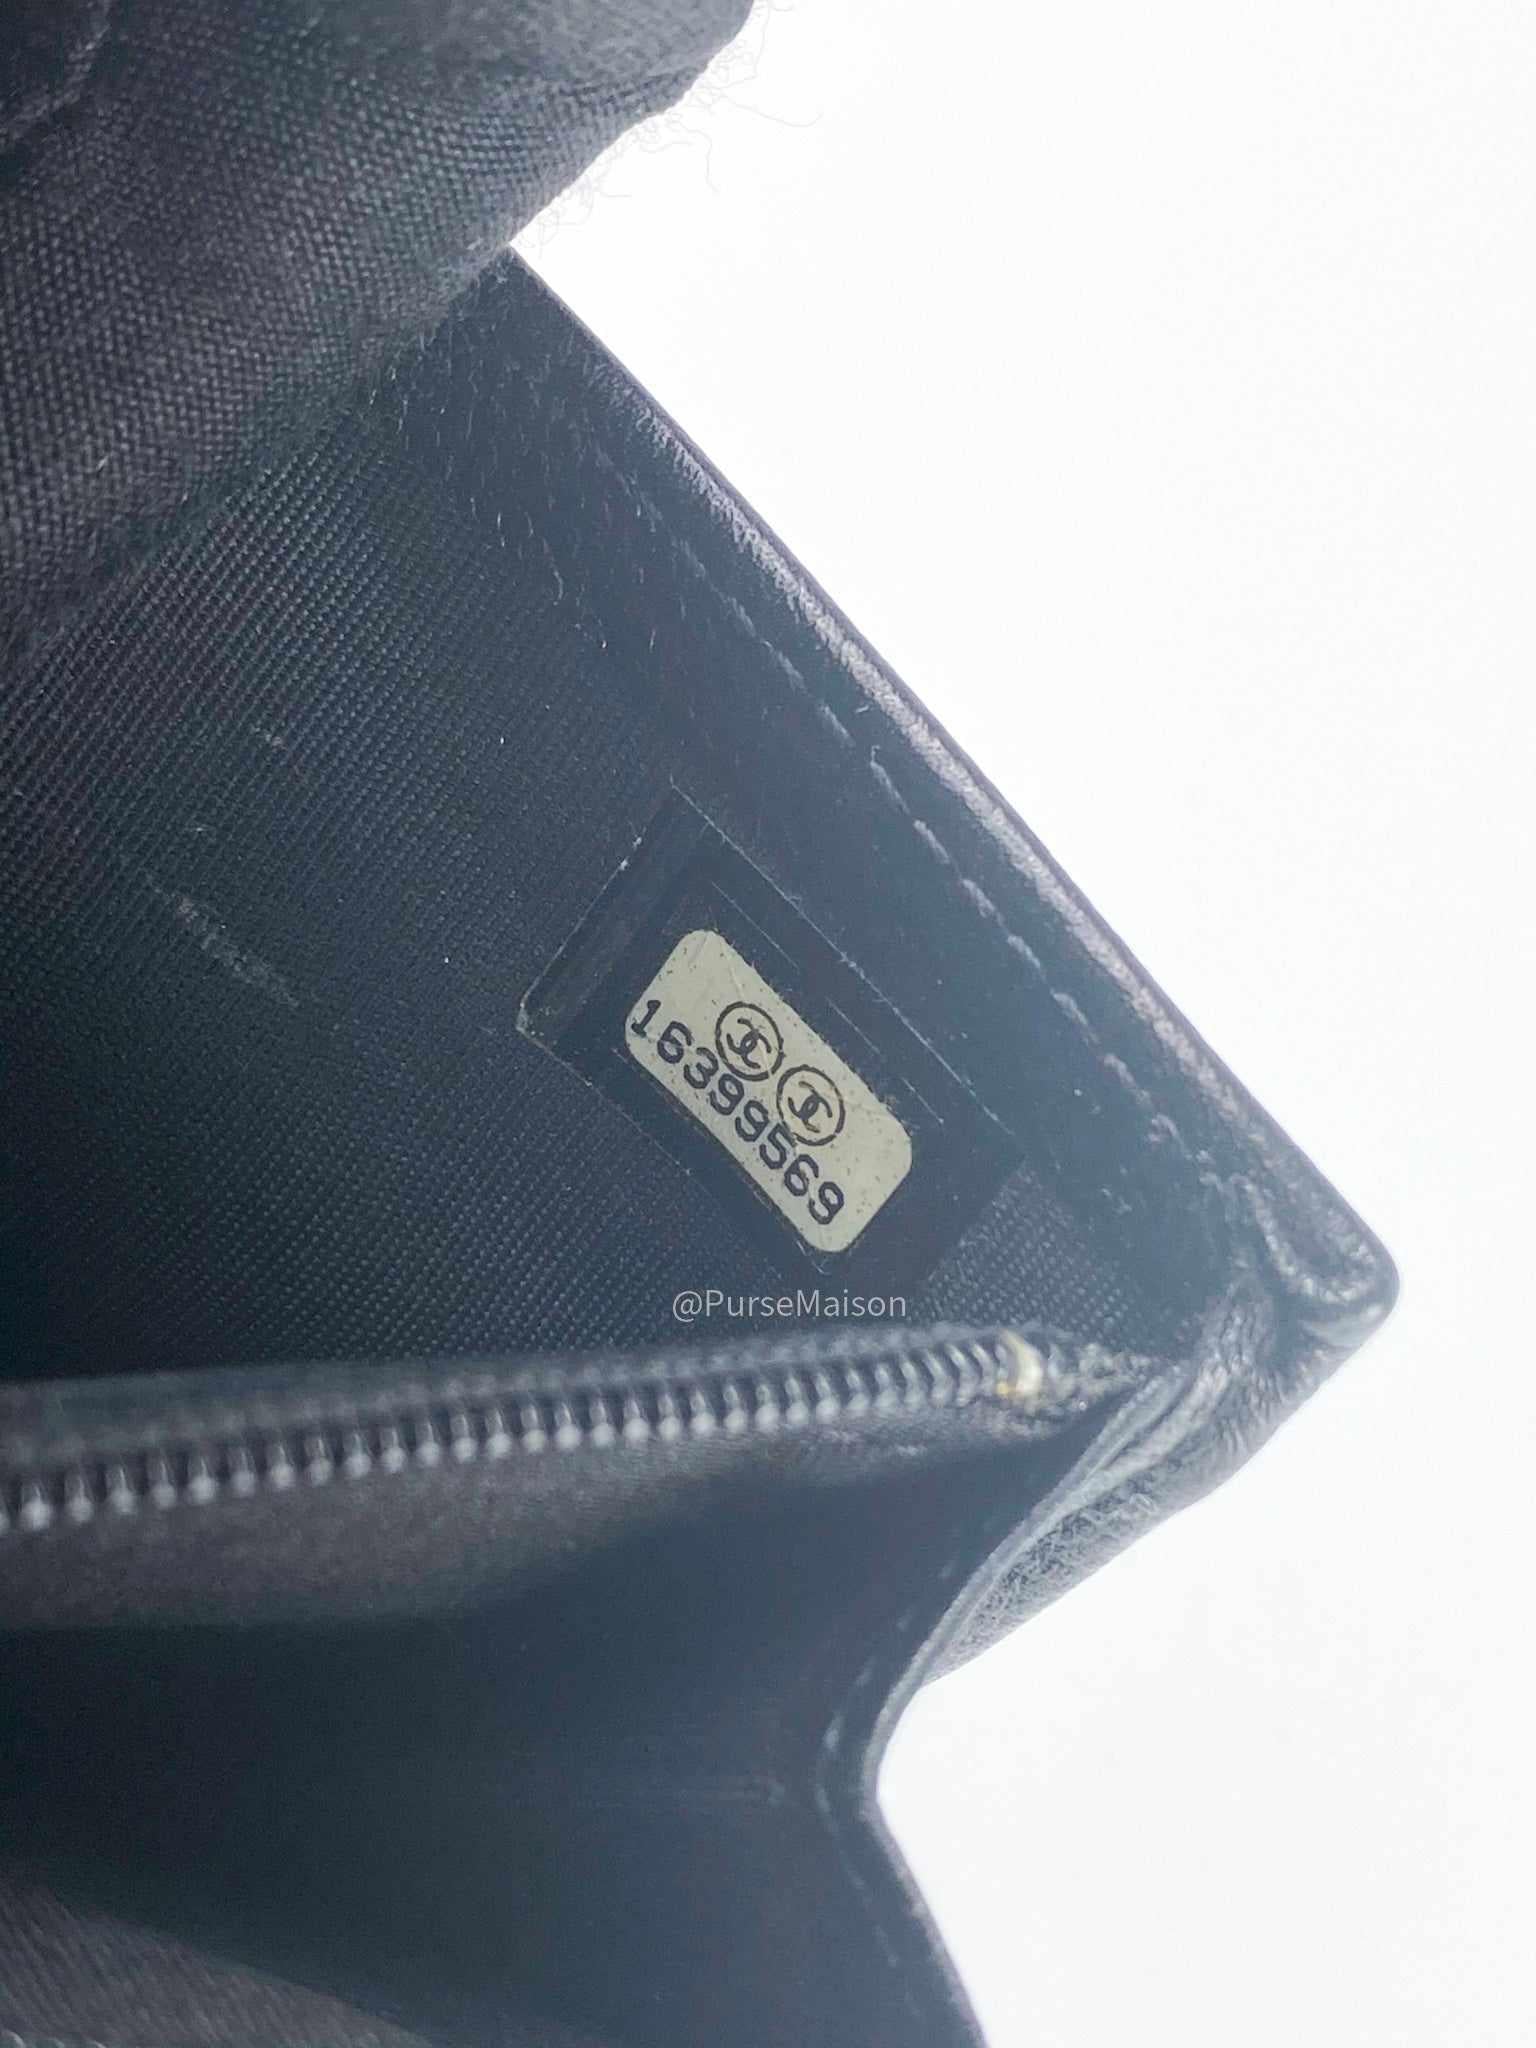 Chanel Long Snap CC Logo Wallet